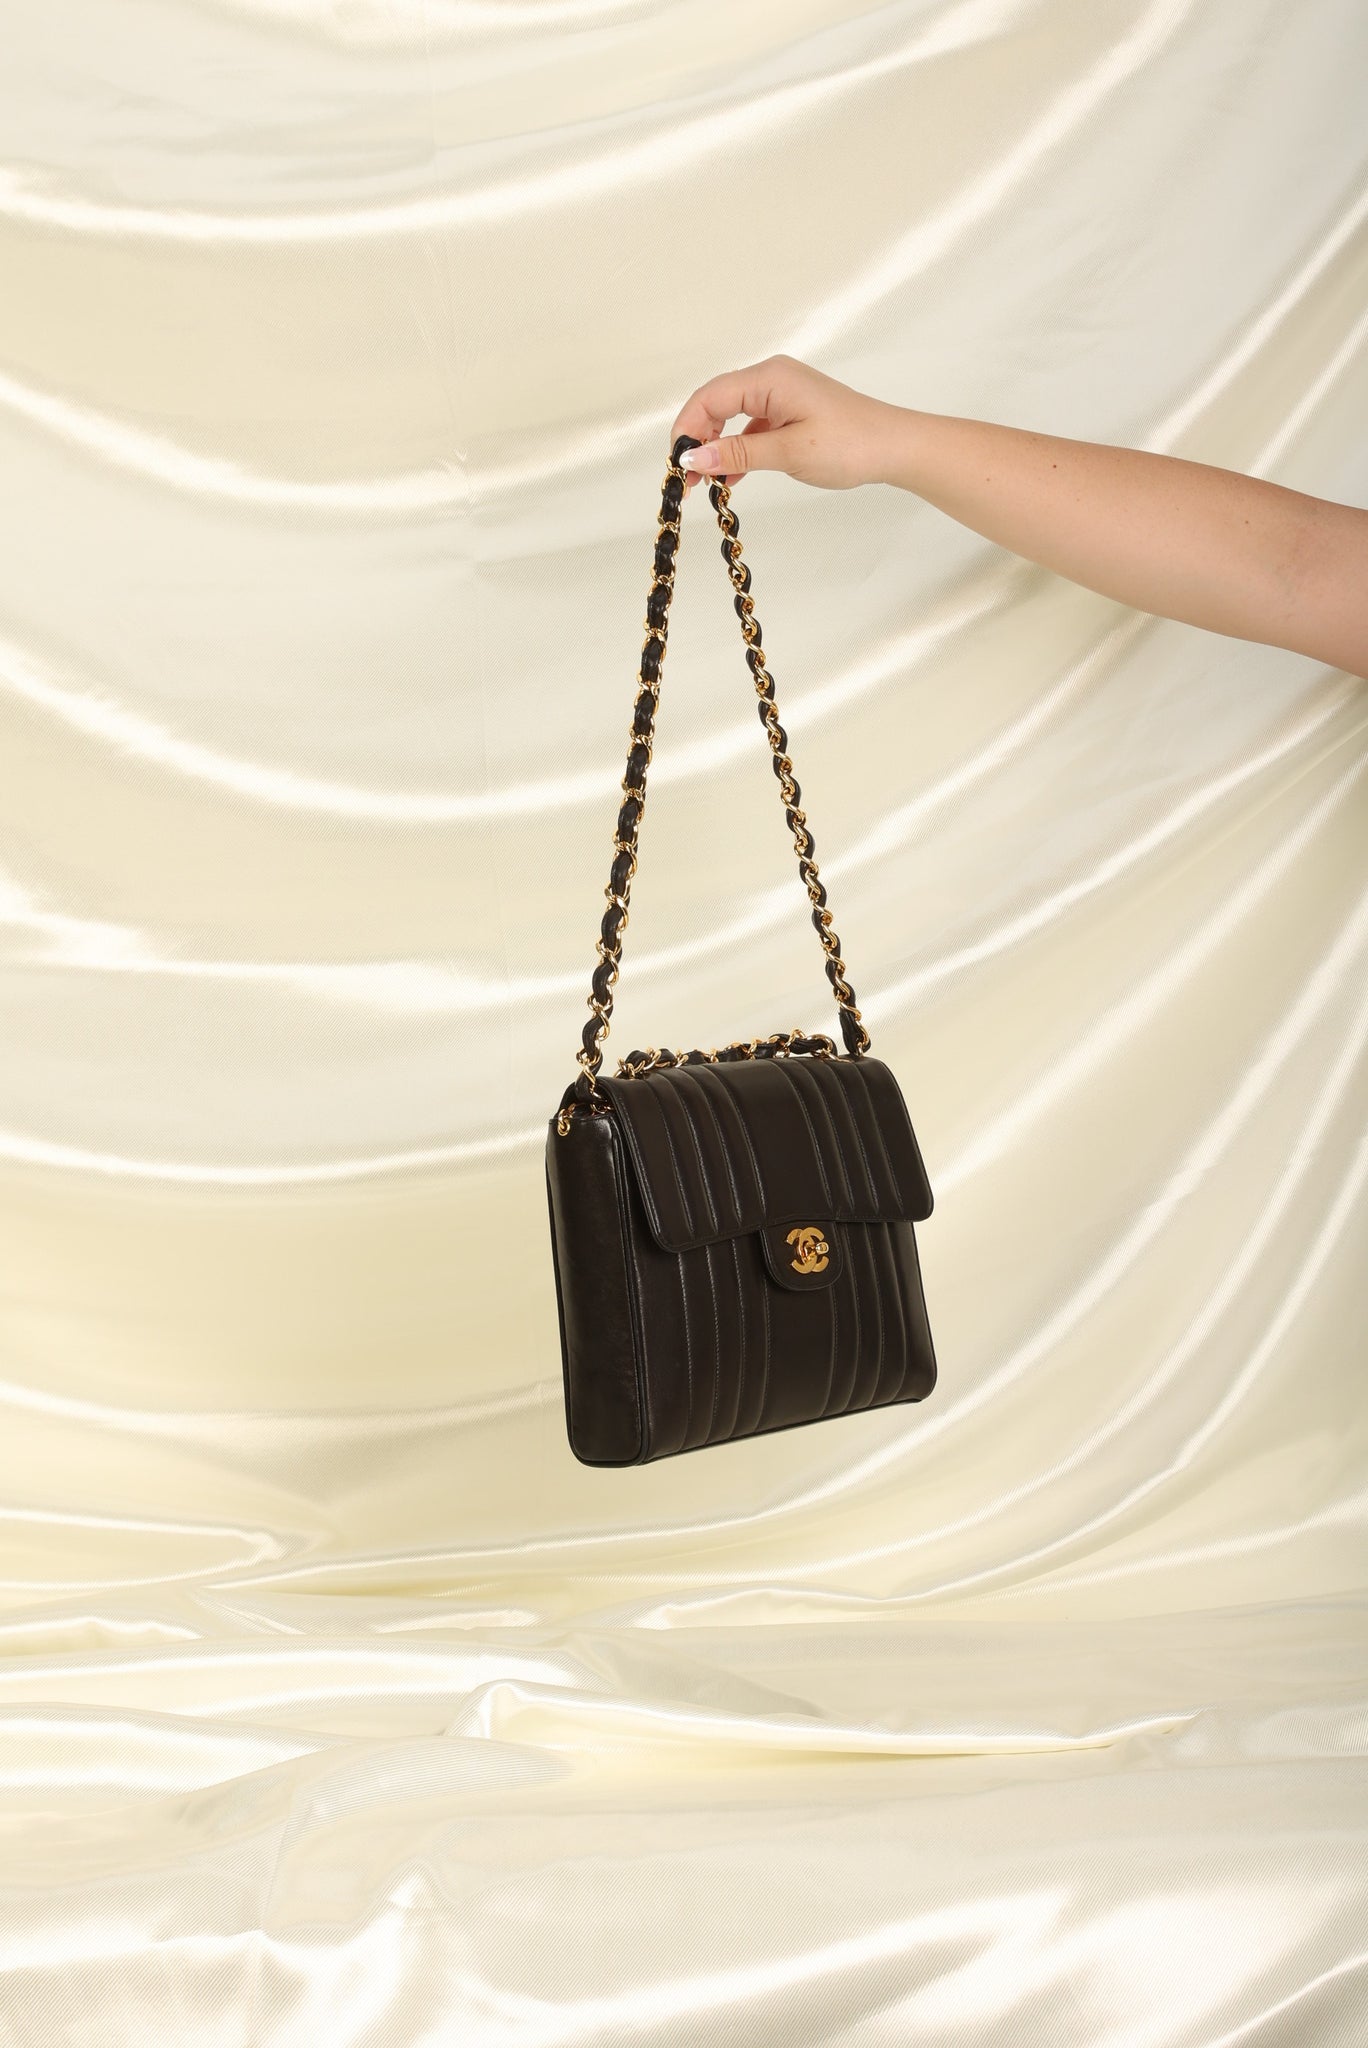 Chanel Jumbo Vertical Quilt Flap Bag - Good or Bag